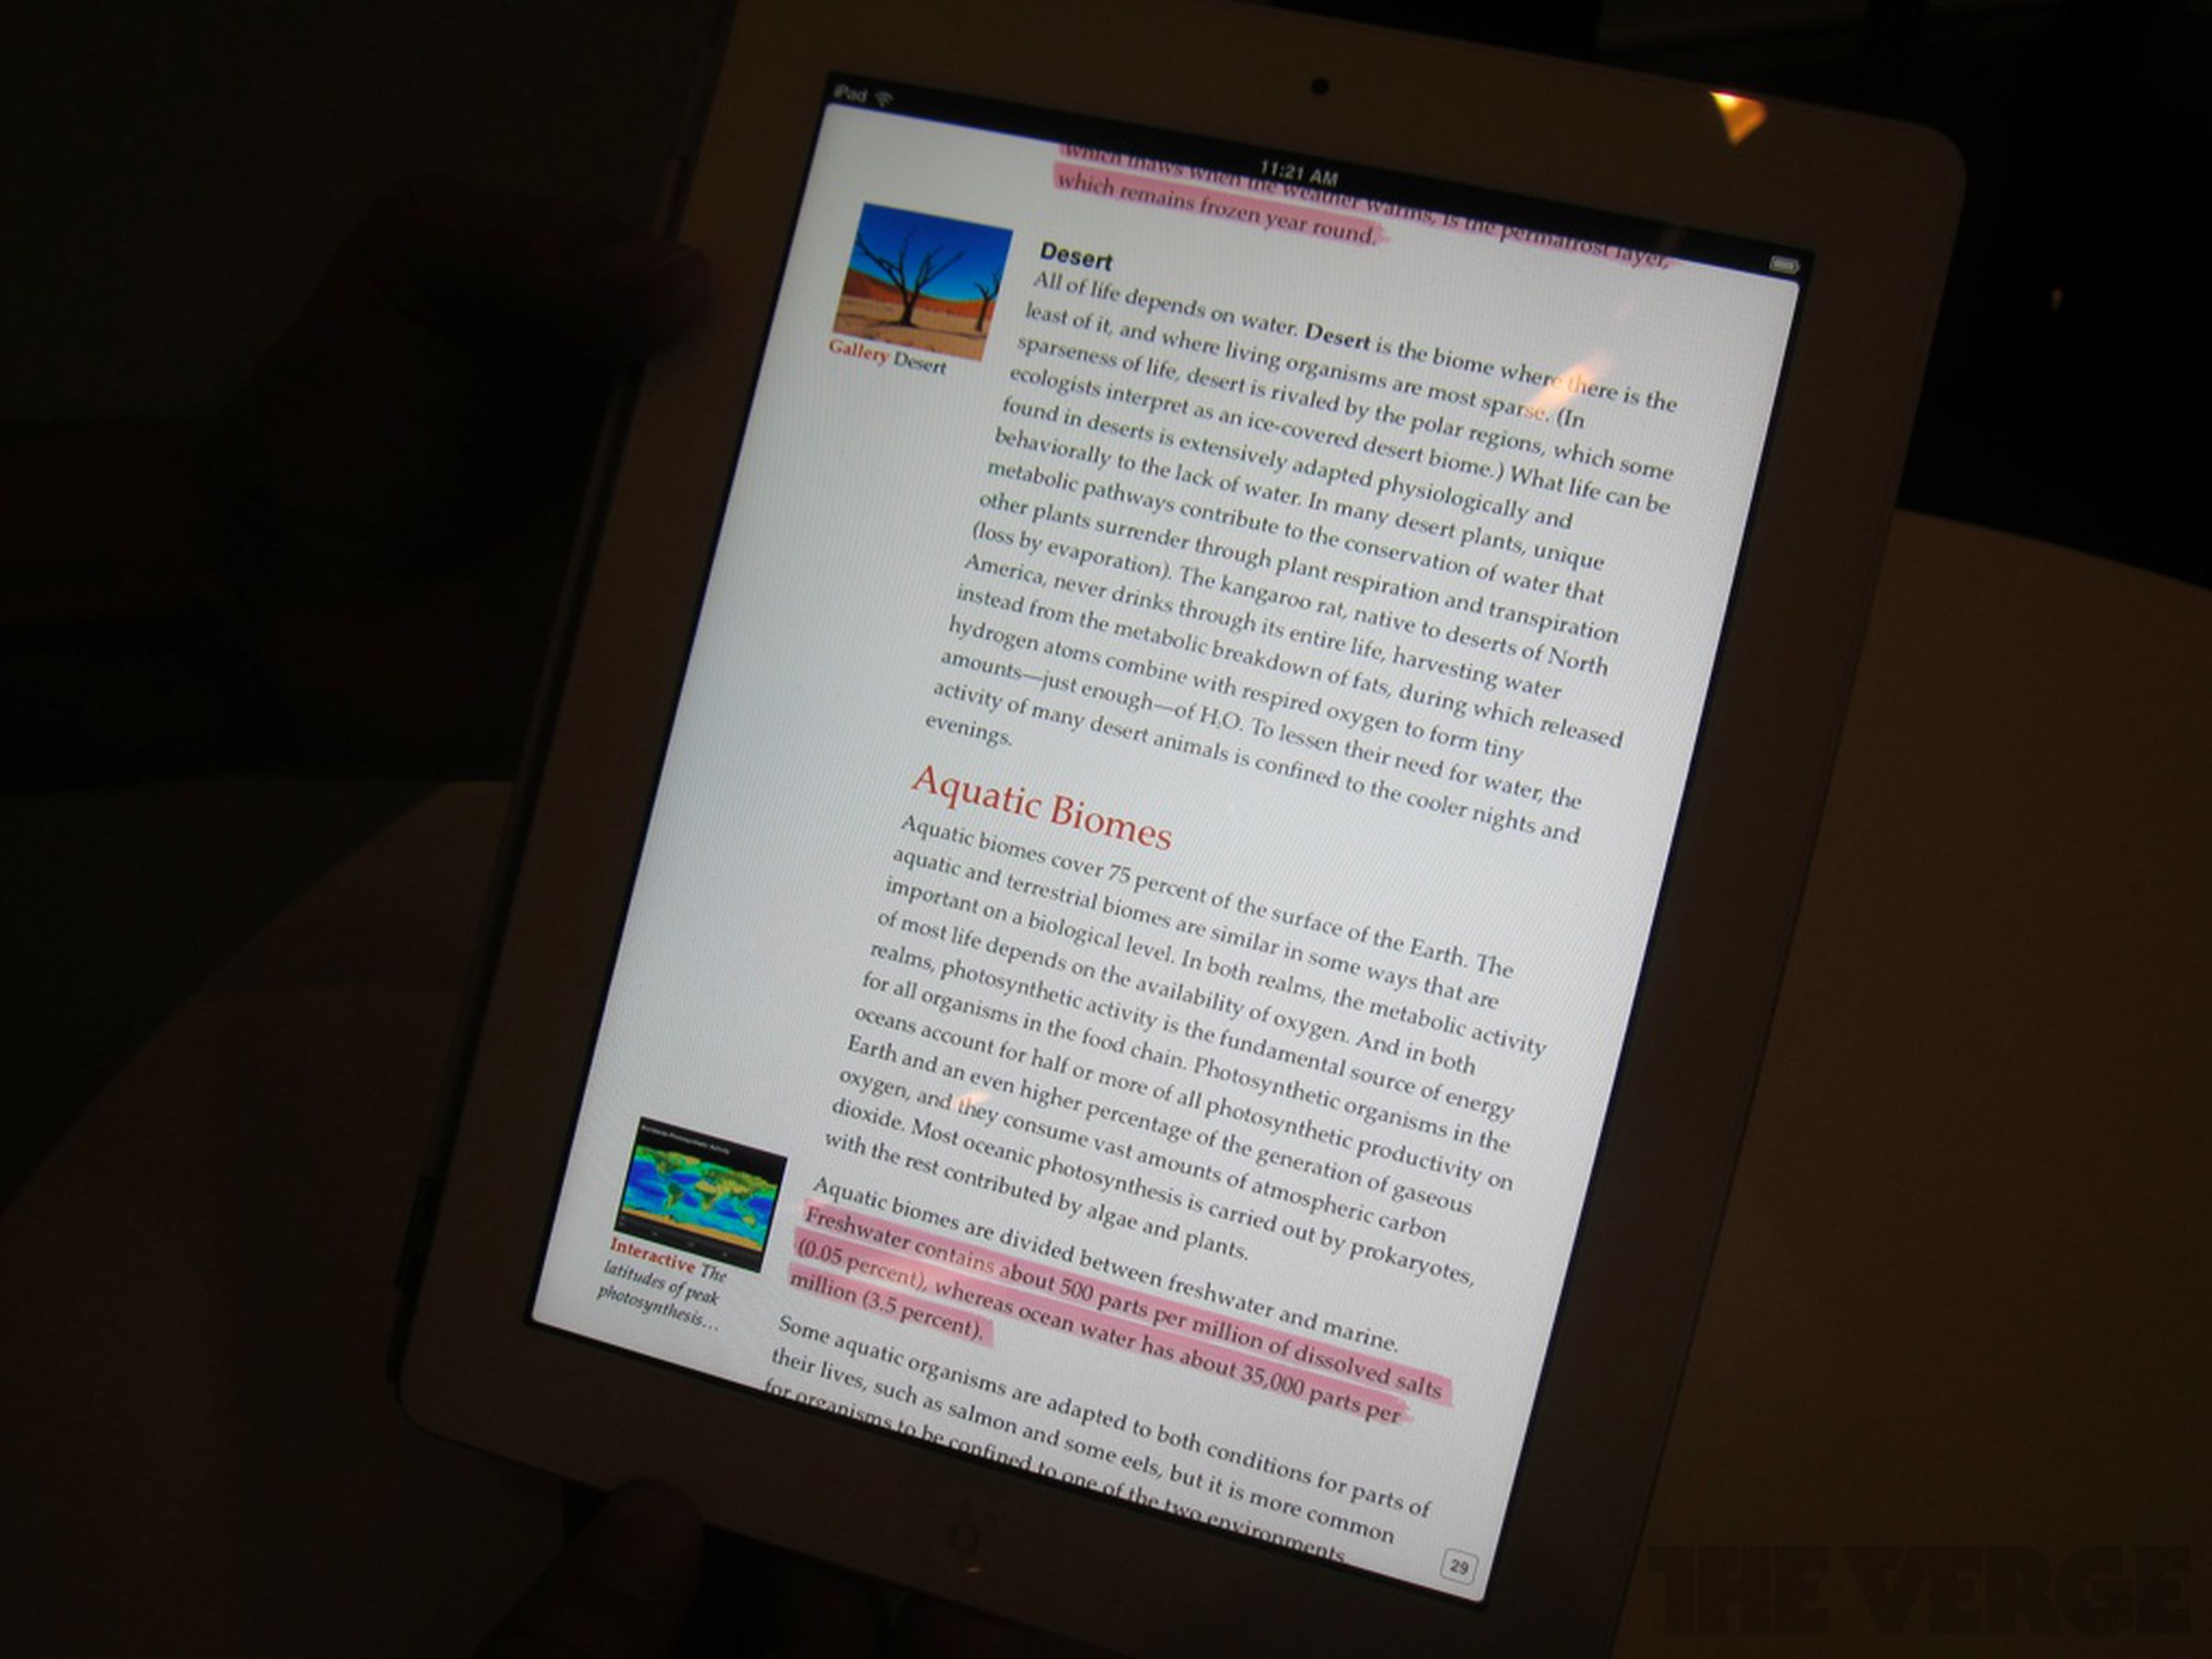 iBooks 2 event hands-on